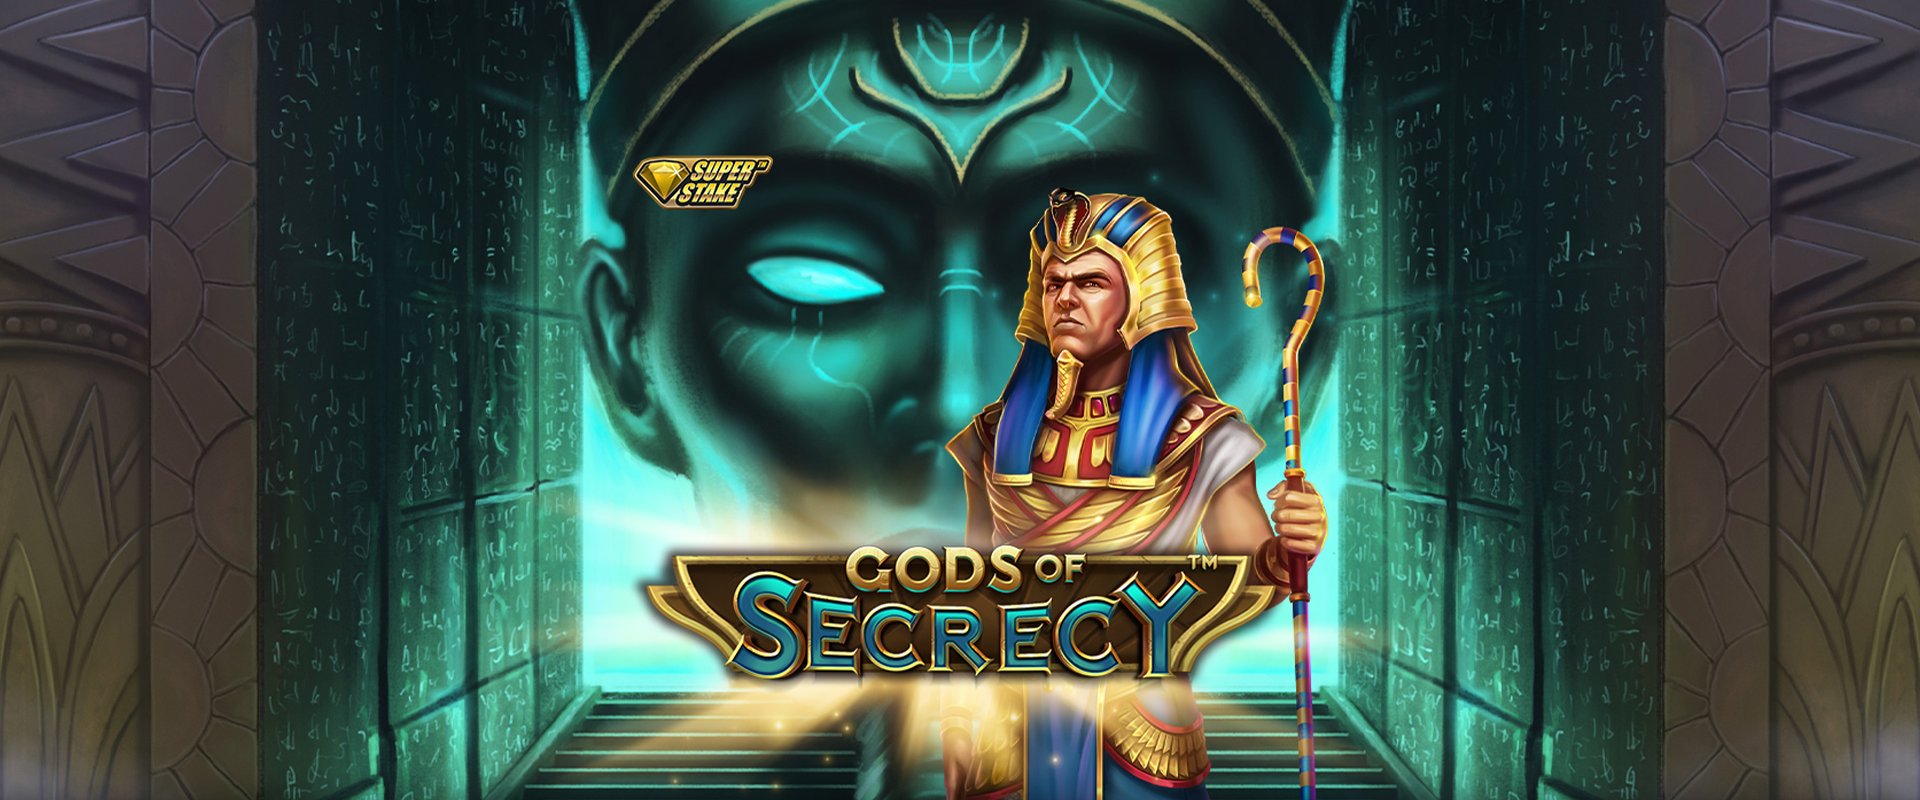 Gods of Secrecy RTP